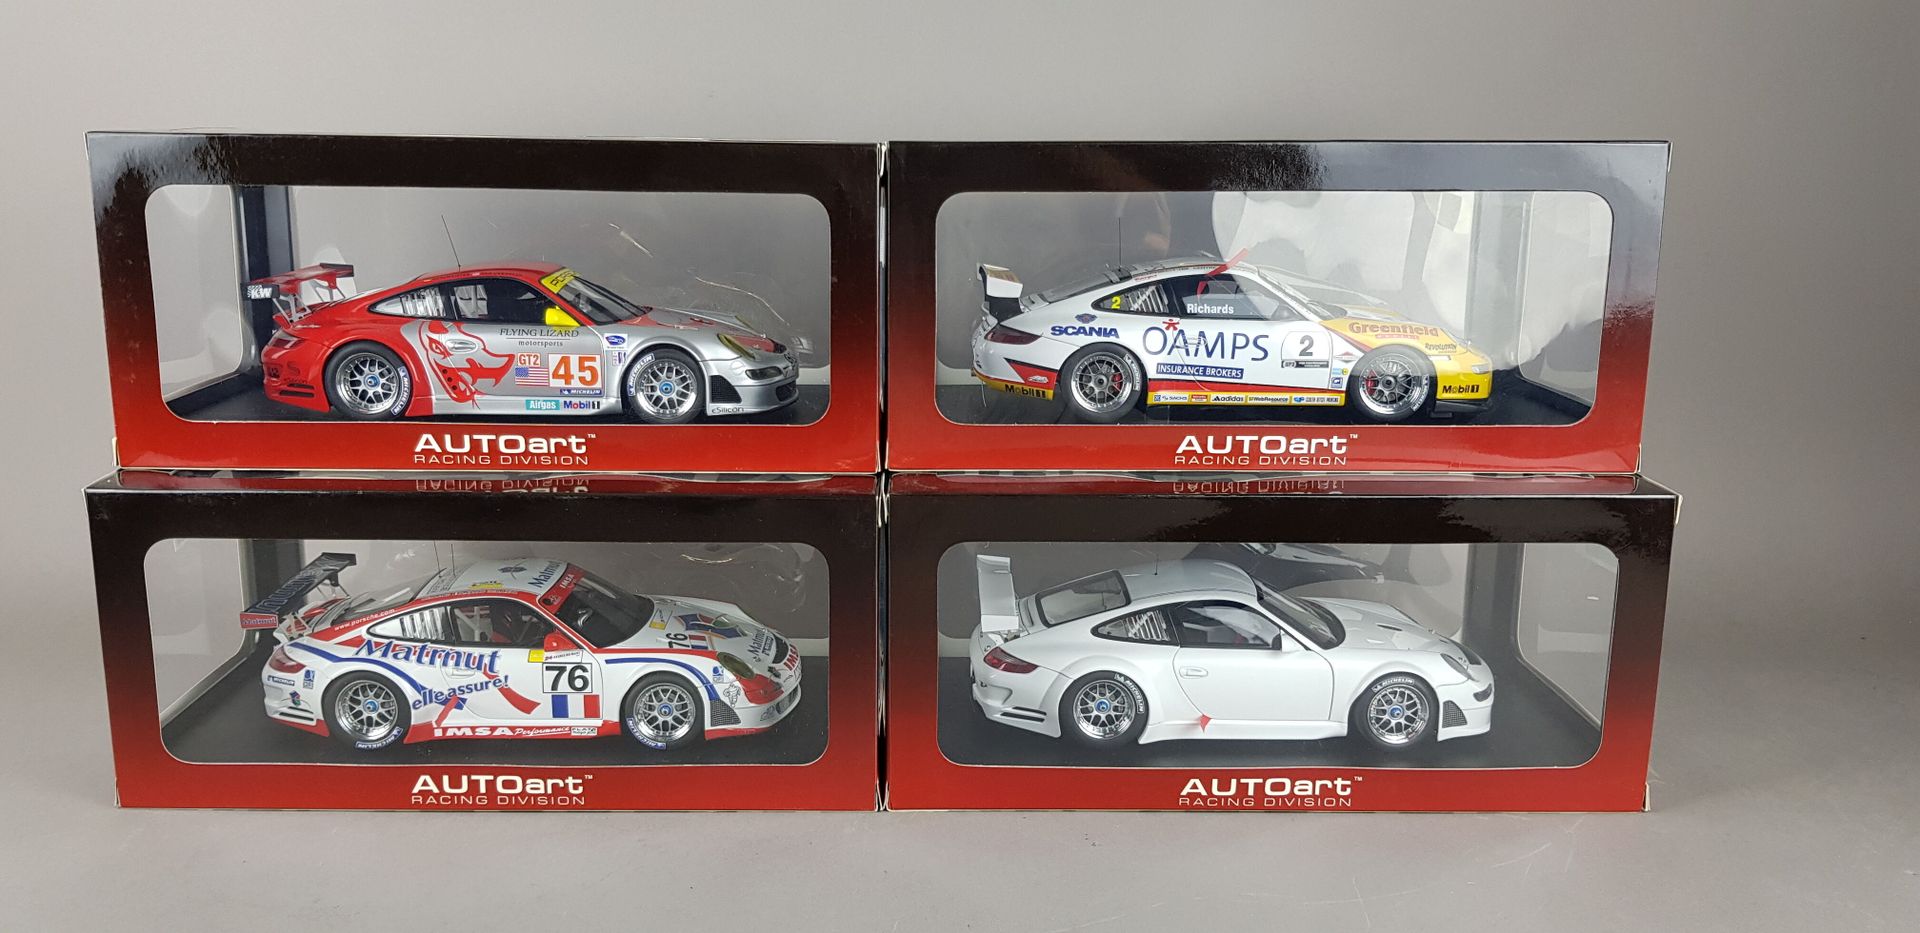 Null AUTO-ART Racing Division - FOUR PORSCHE 1/18 scale:

1x 911(997) GT3 Austra&hellip;